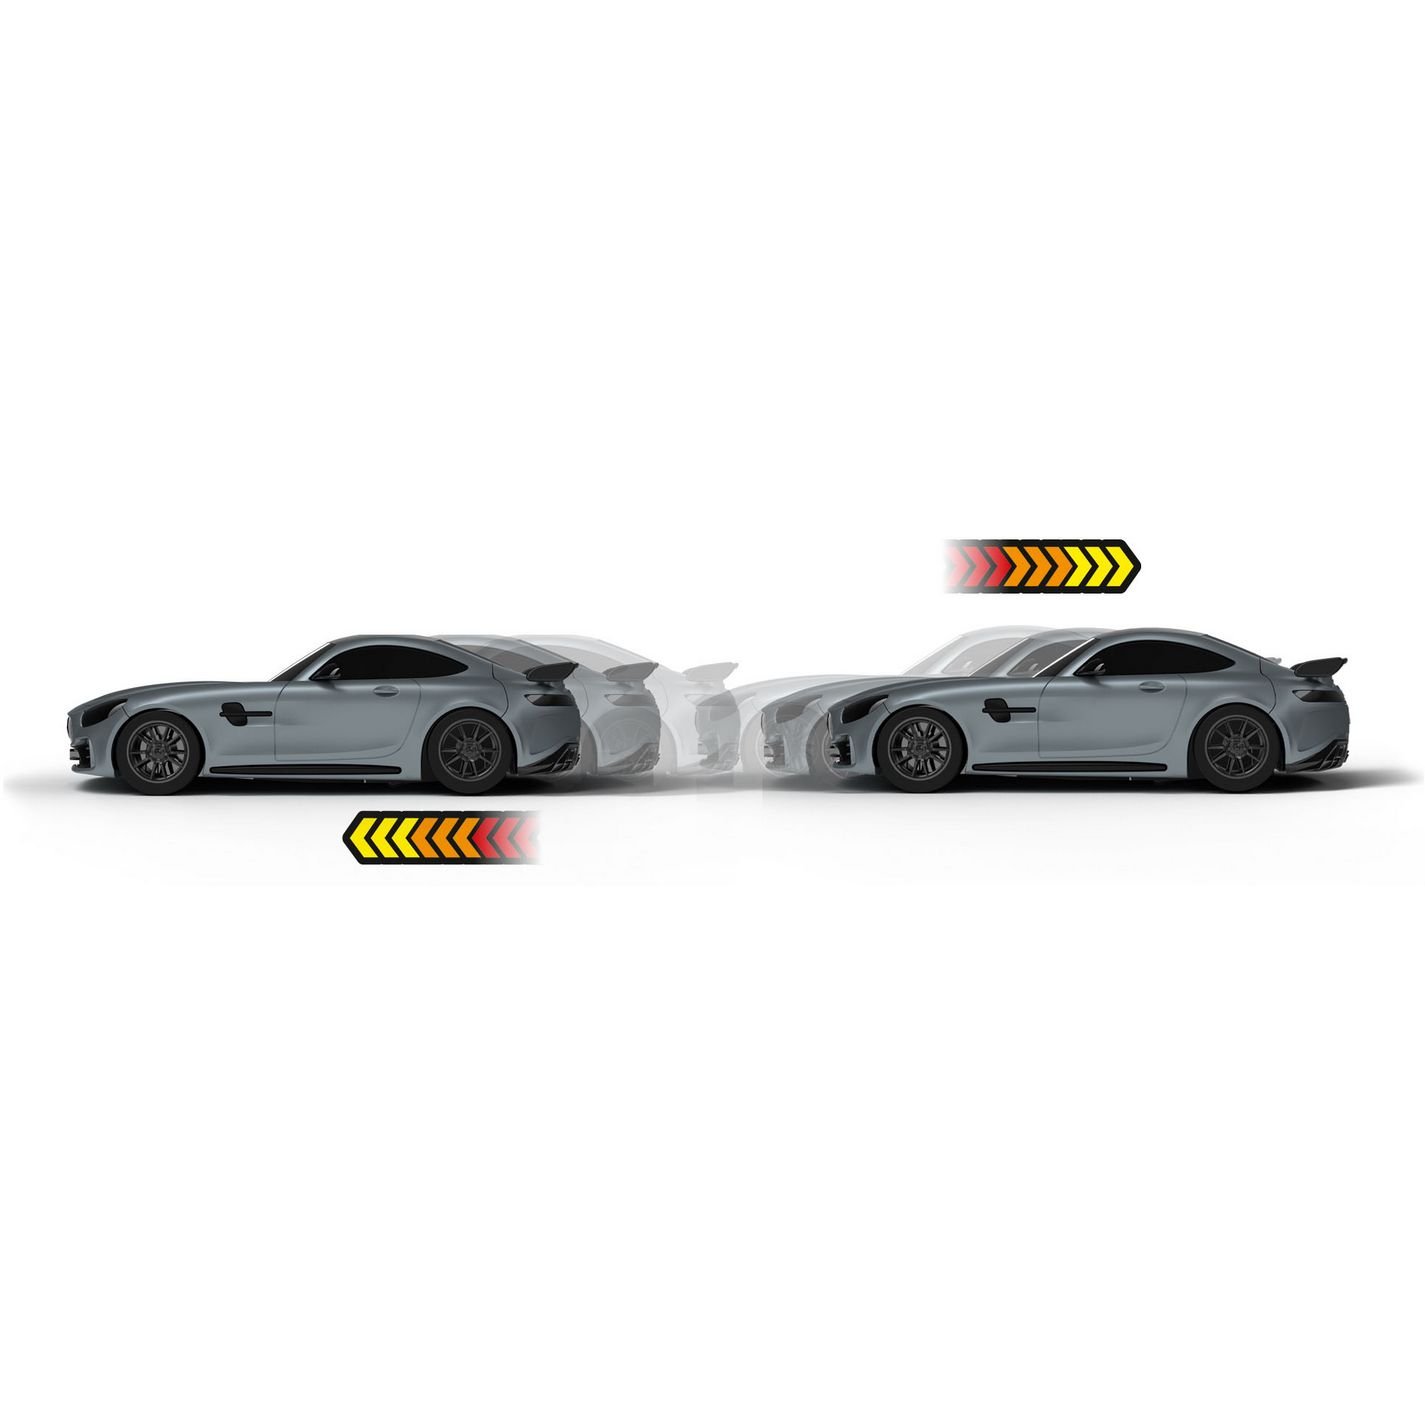 Сборная модель Revell Mercedes-AMG GT R, Grey Car, уровень 1, масштаб 1:43, 10 деталей (RVL-23152) - фото 4